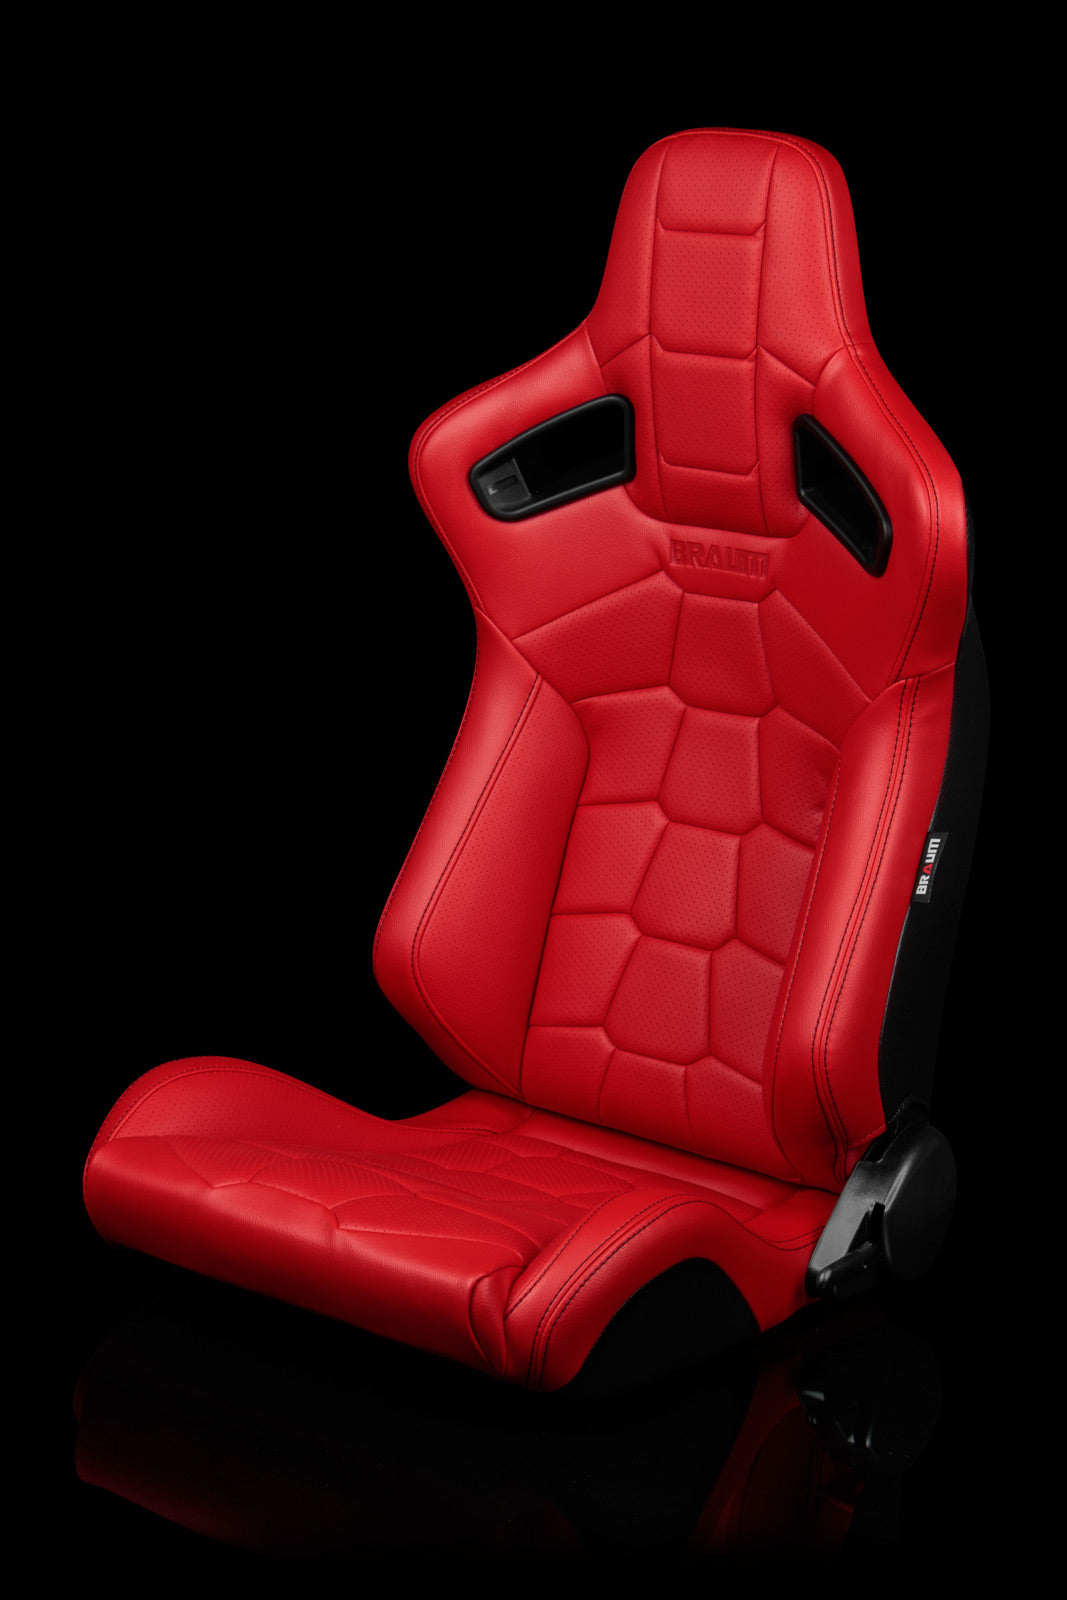 BRAUM Elite-X Series Racing Seats (Komodo) – Pair - Mafia Motorsports